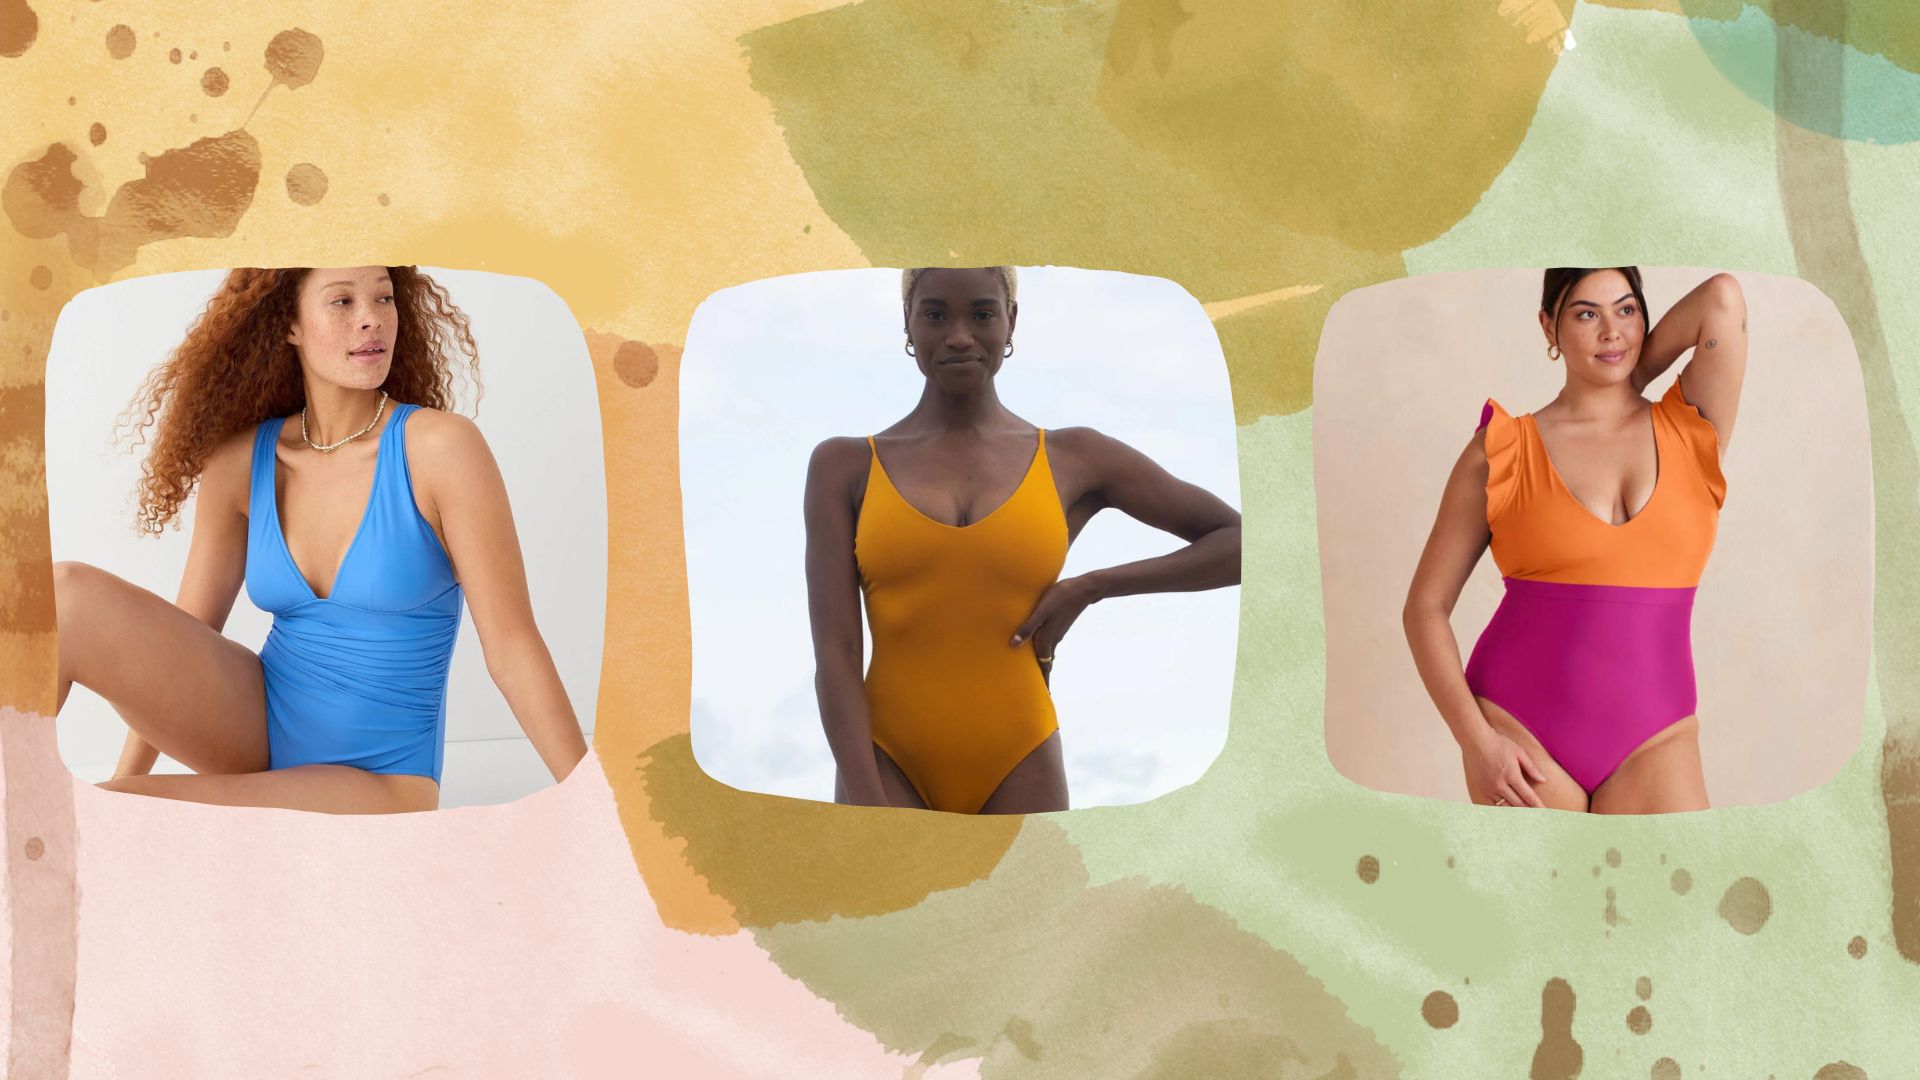 Vivid Trim Asymmetrical One-Piece Swimsuit - Women - Ready-to-Wear